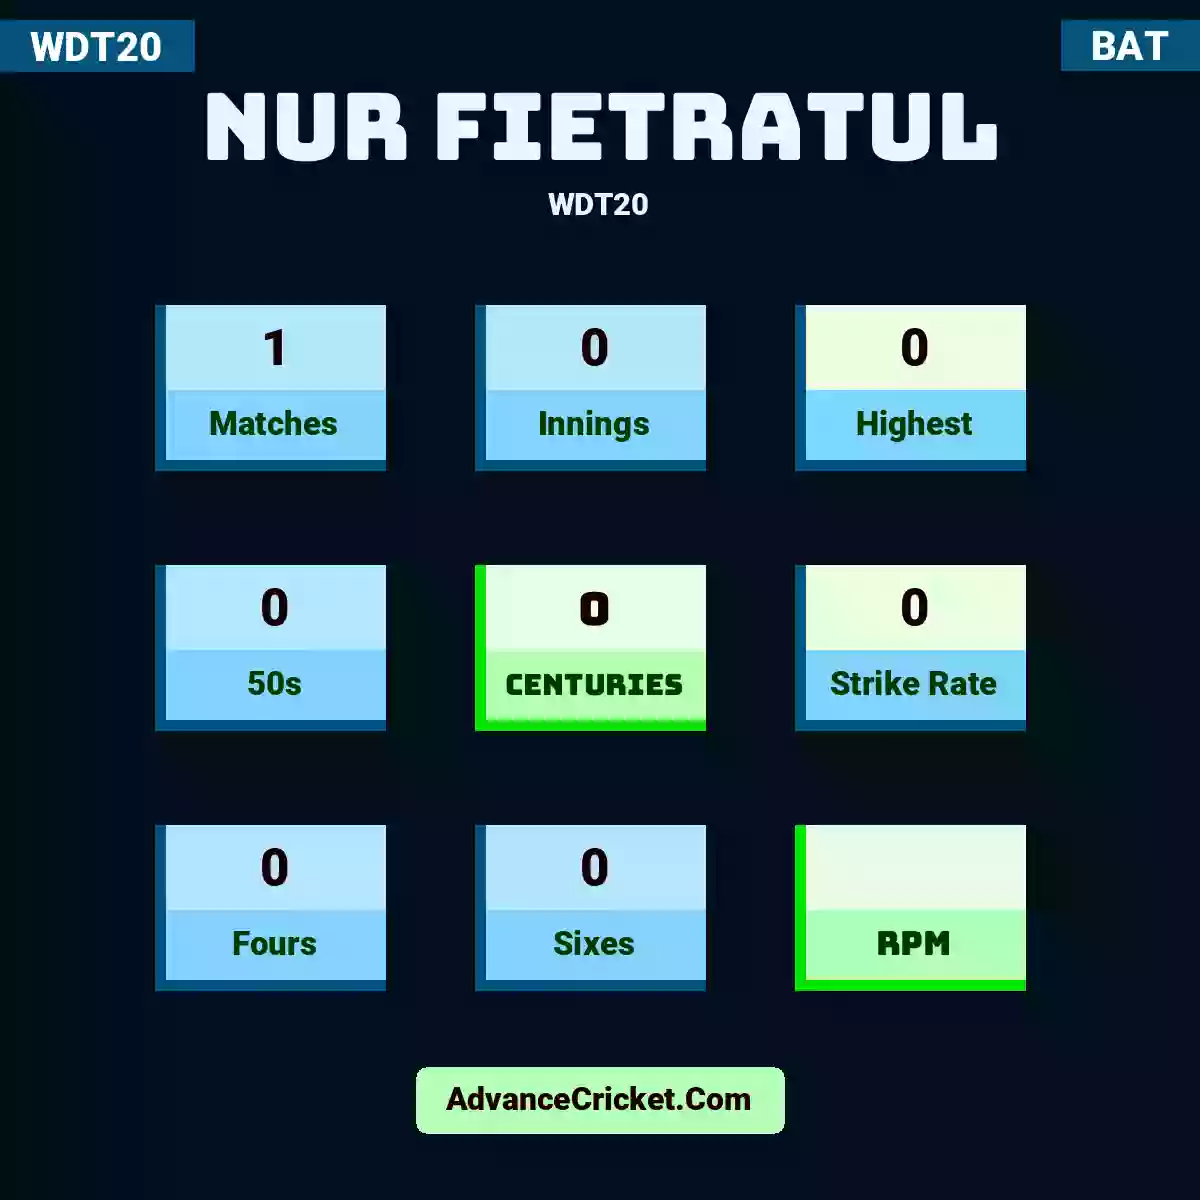 Nur Fietratul WDT20 , Nur Fietratul played 1 matches, scored 0 runs as highest, 0 half-centuries, and 0 centuries, with a strike rate of 0. N.Fietratul hit 0 fours and 0 sixes.